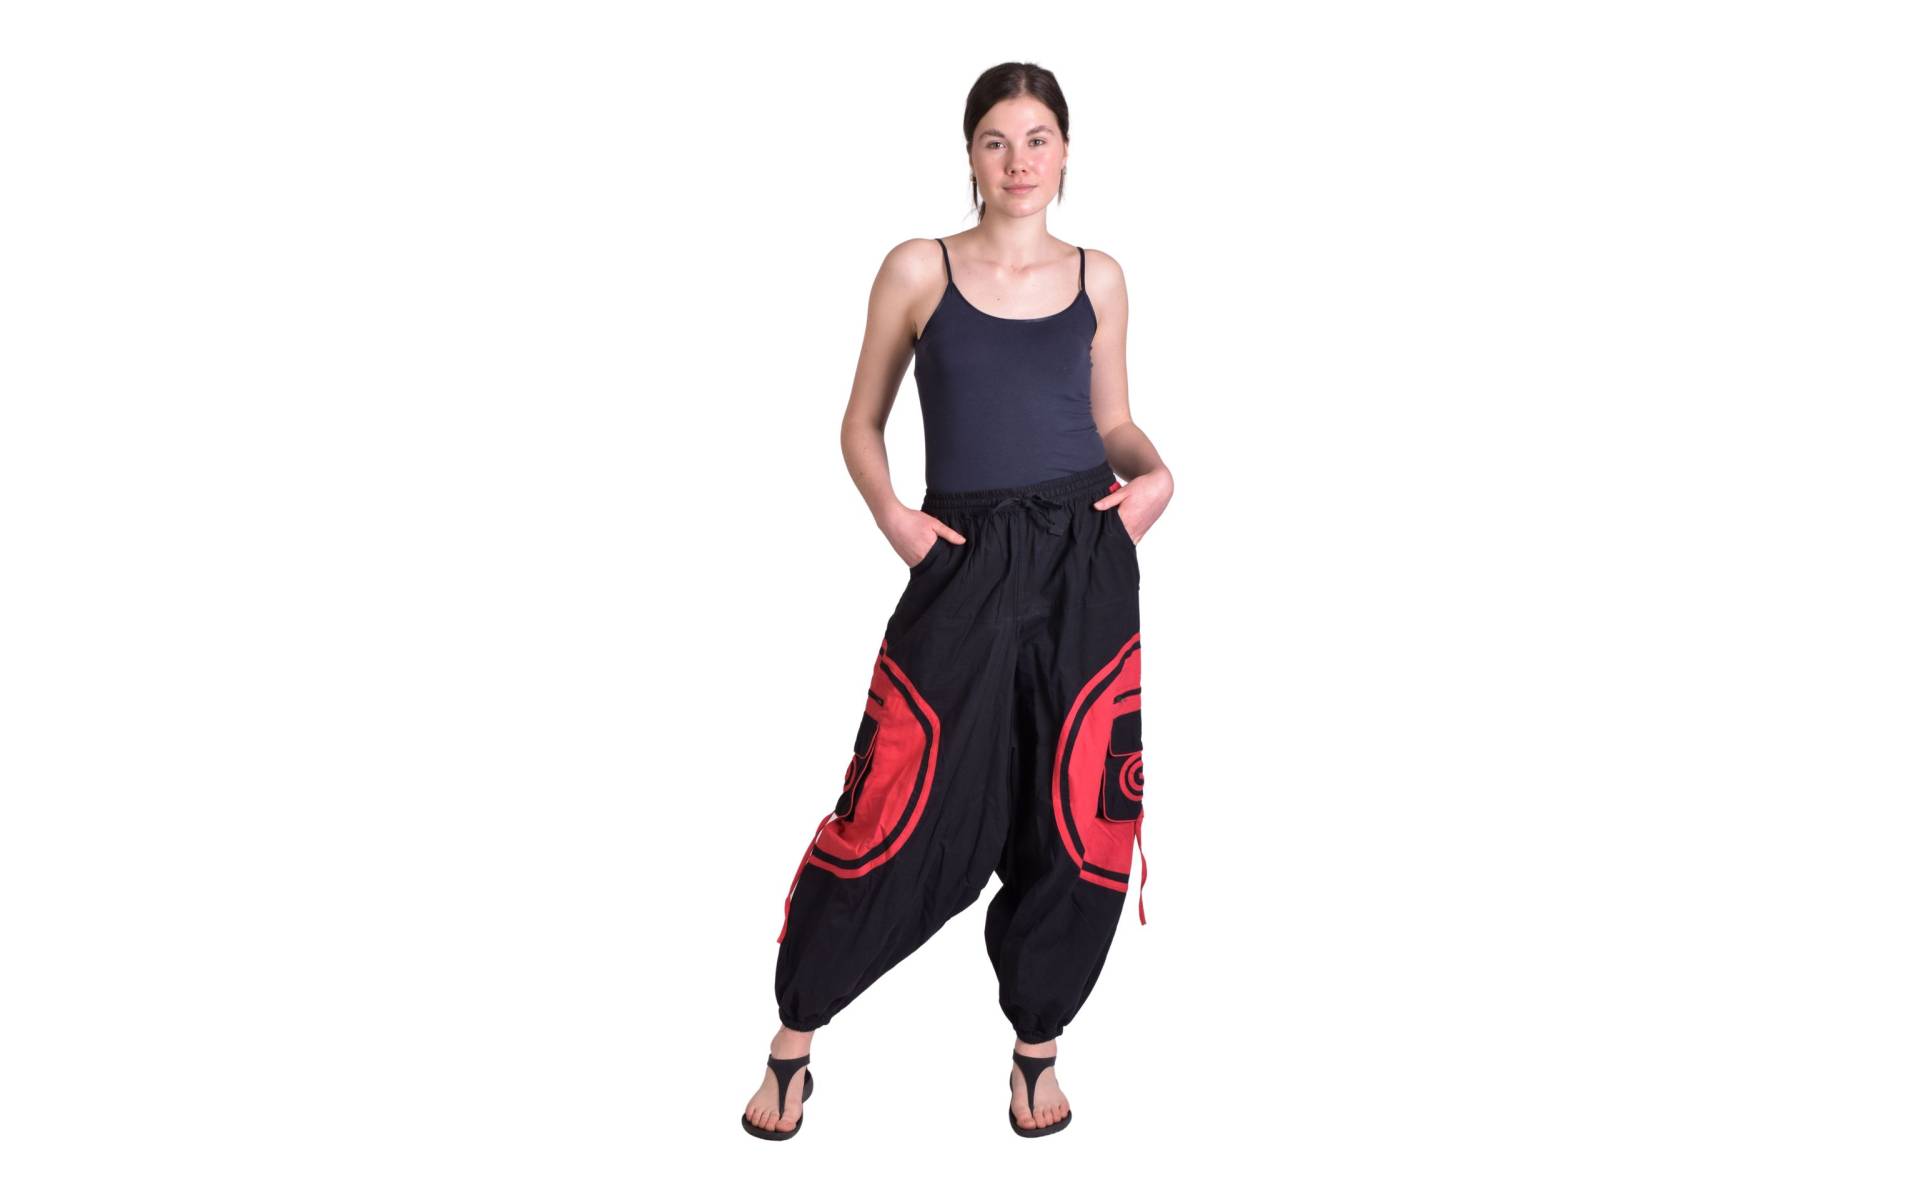 Dlhé turecké unisex nohavice, čierno-červené, vrecká, pružný pás